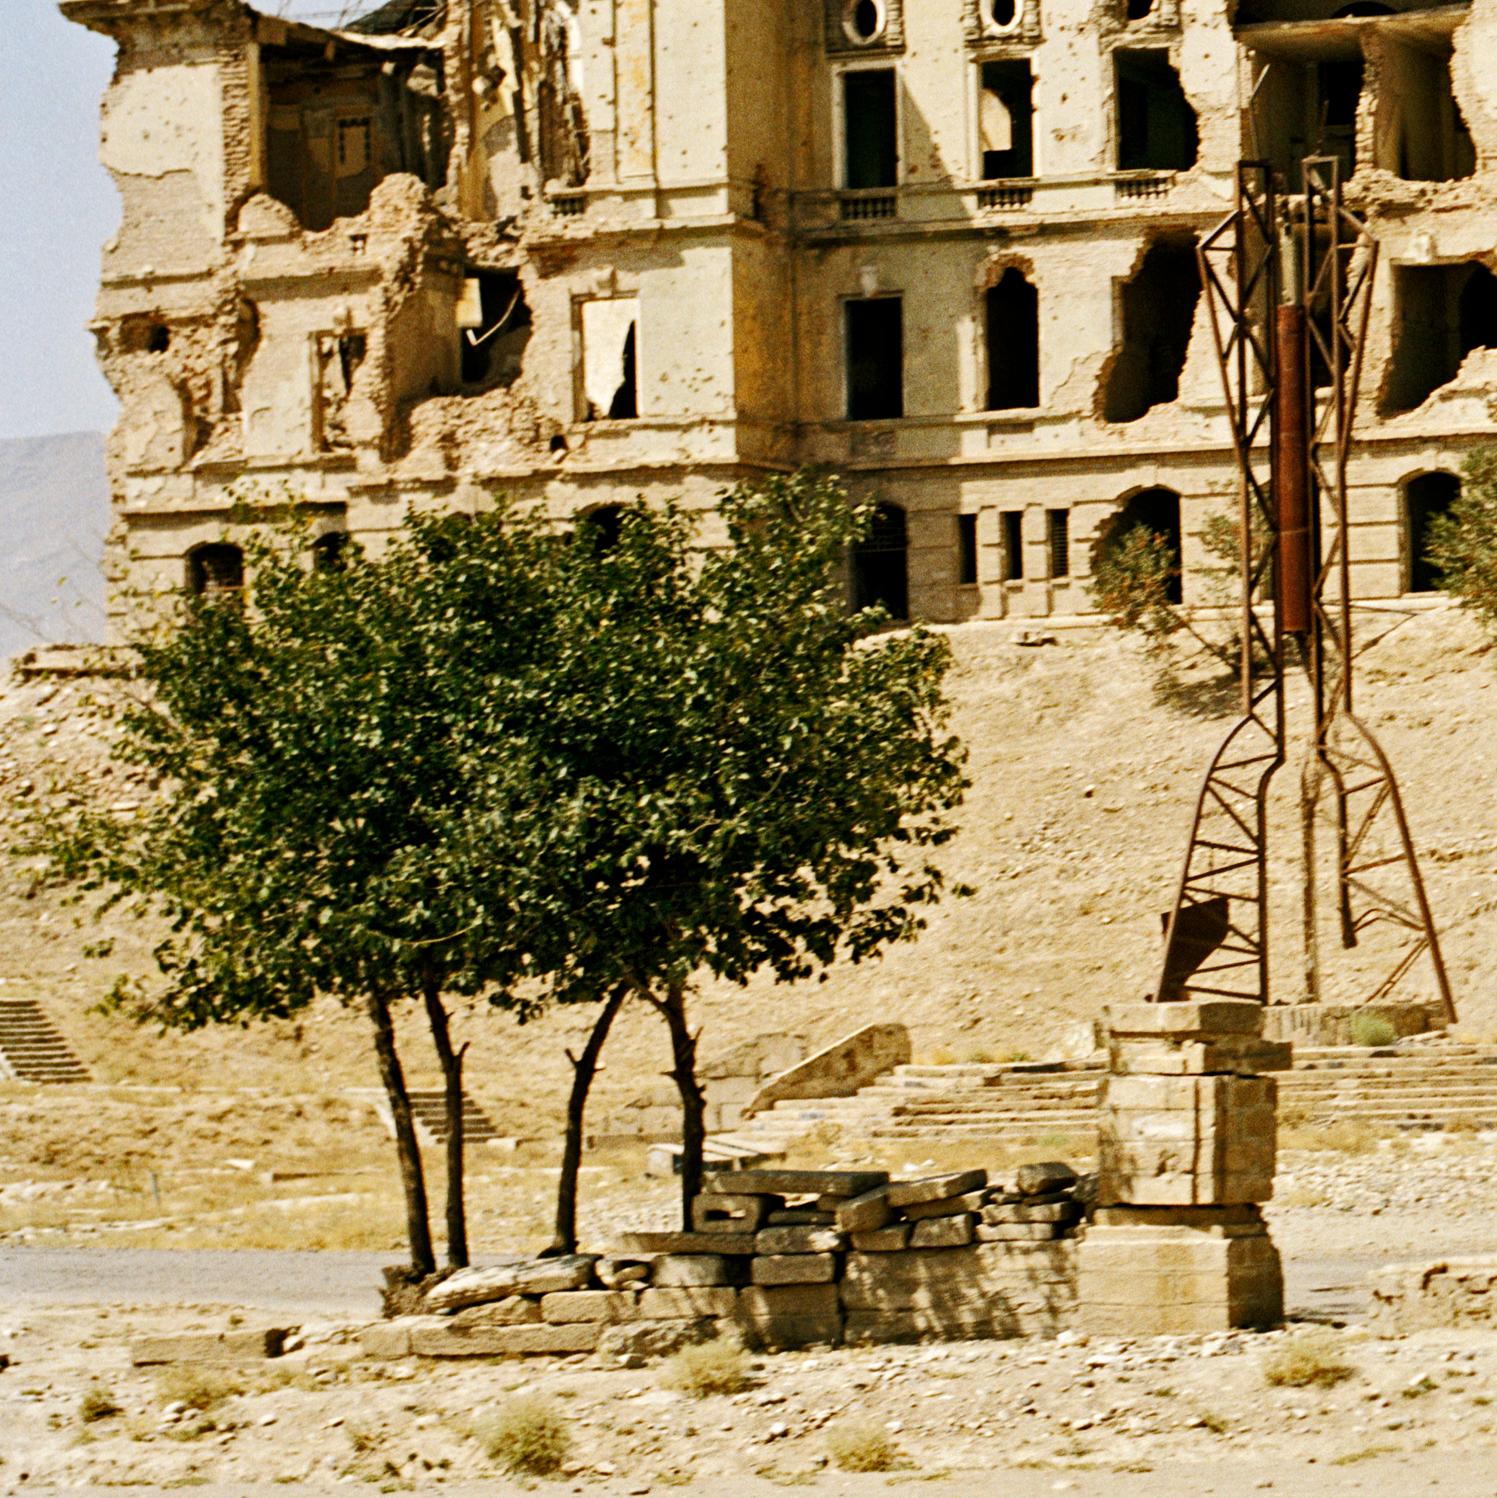 Am Darulaman-Palast, Kabul, August 2003 (Zeitgenössisch), Photograph, von Jonathan Becker